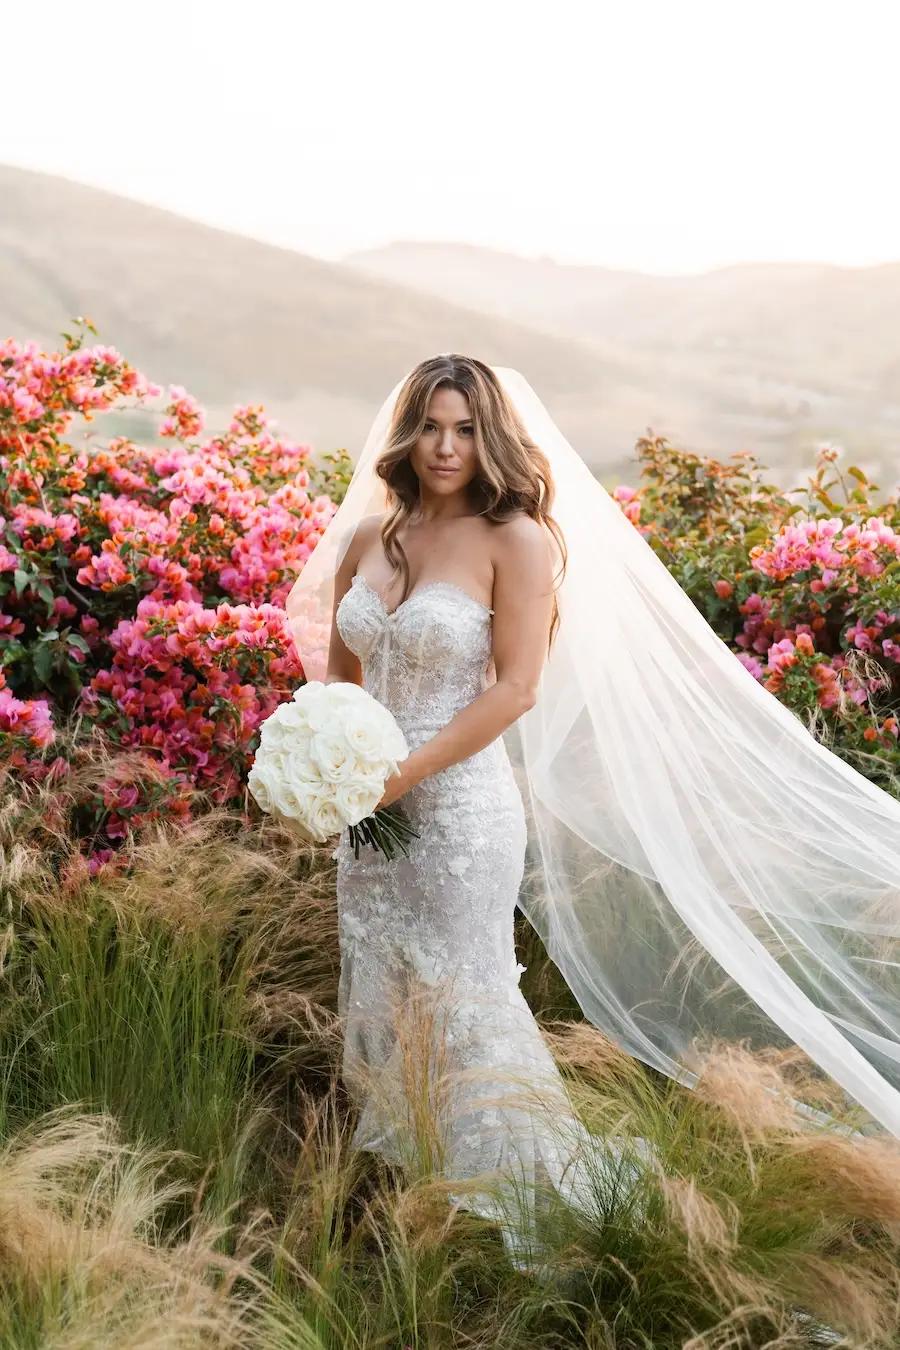 Jolene Wears Sparkle Lace Strapless Wedding Dress. Mobile Image